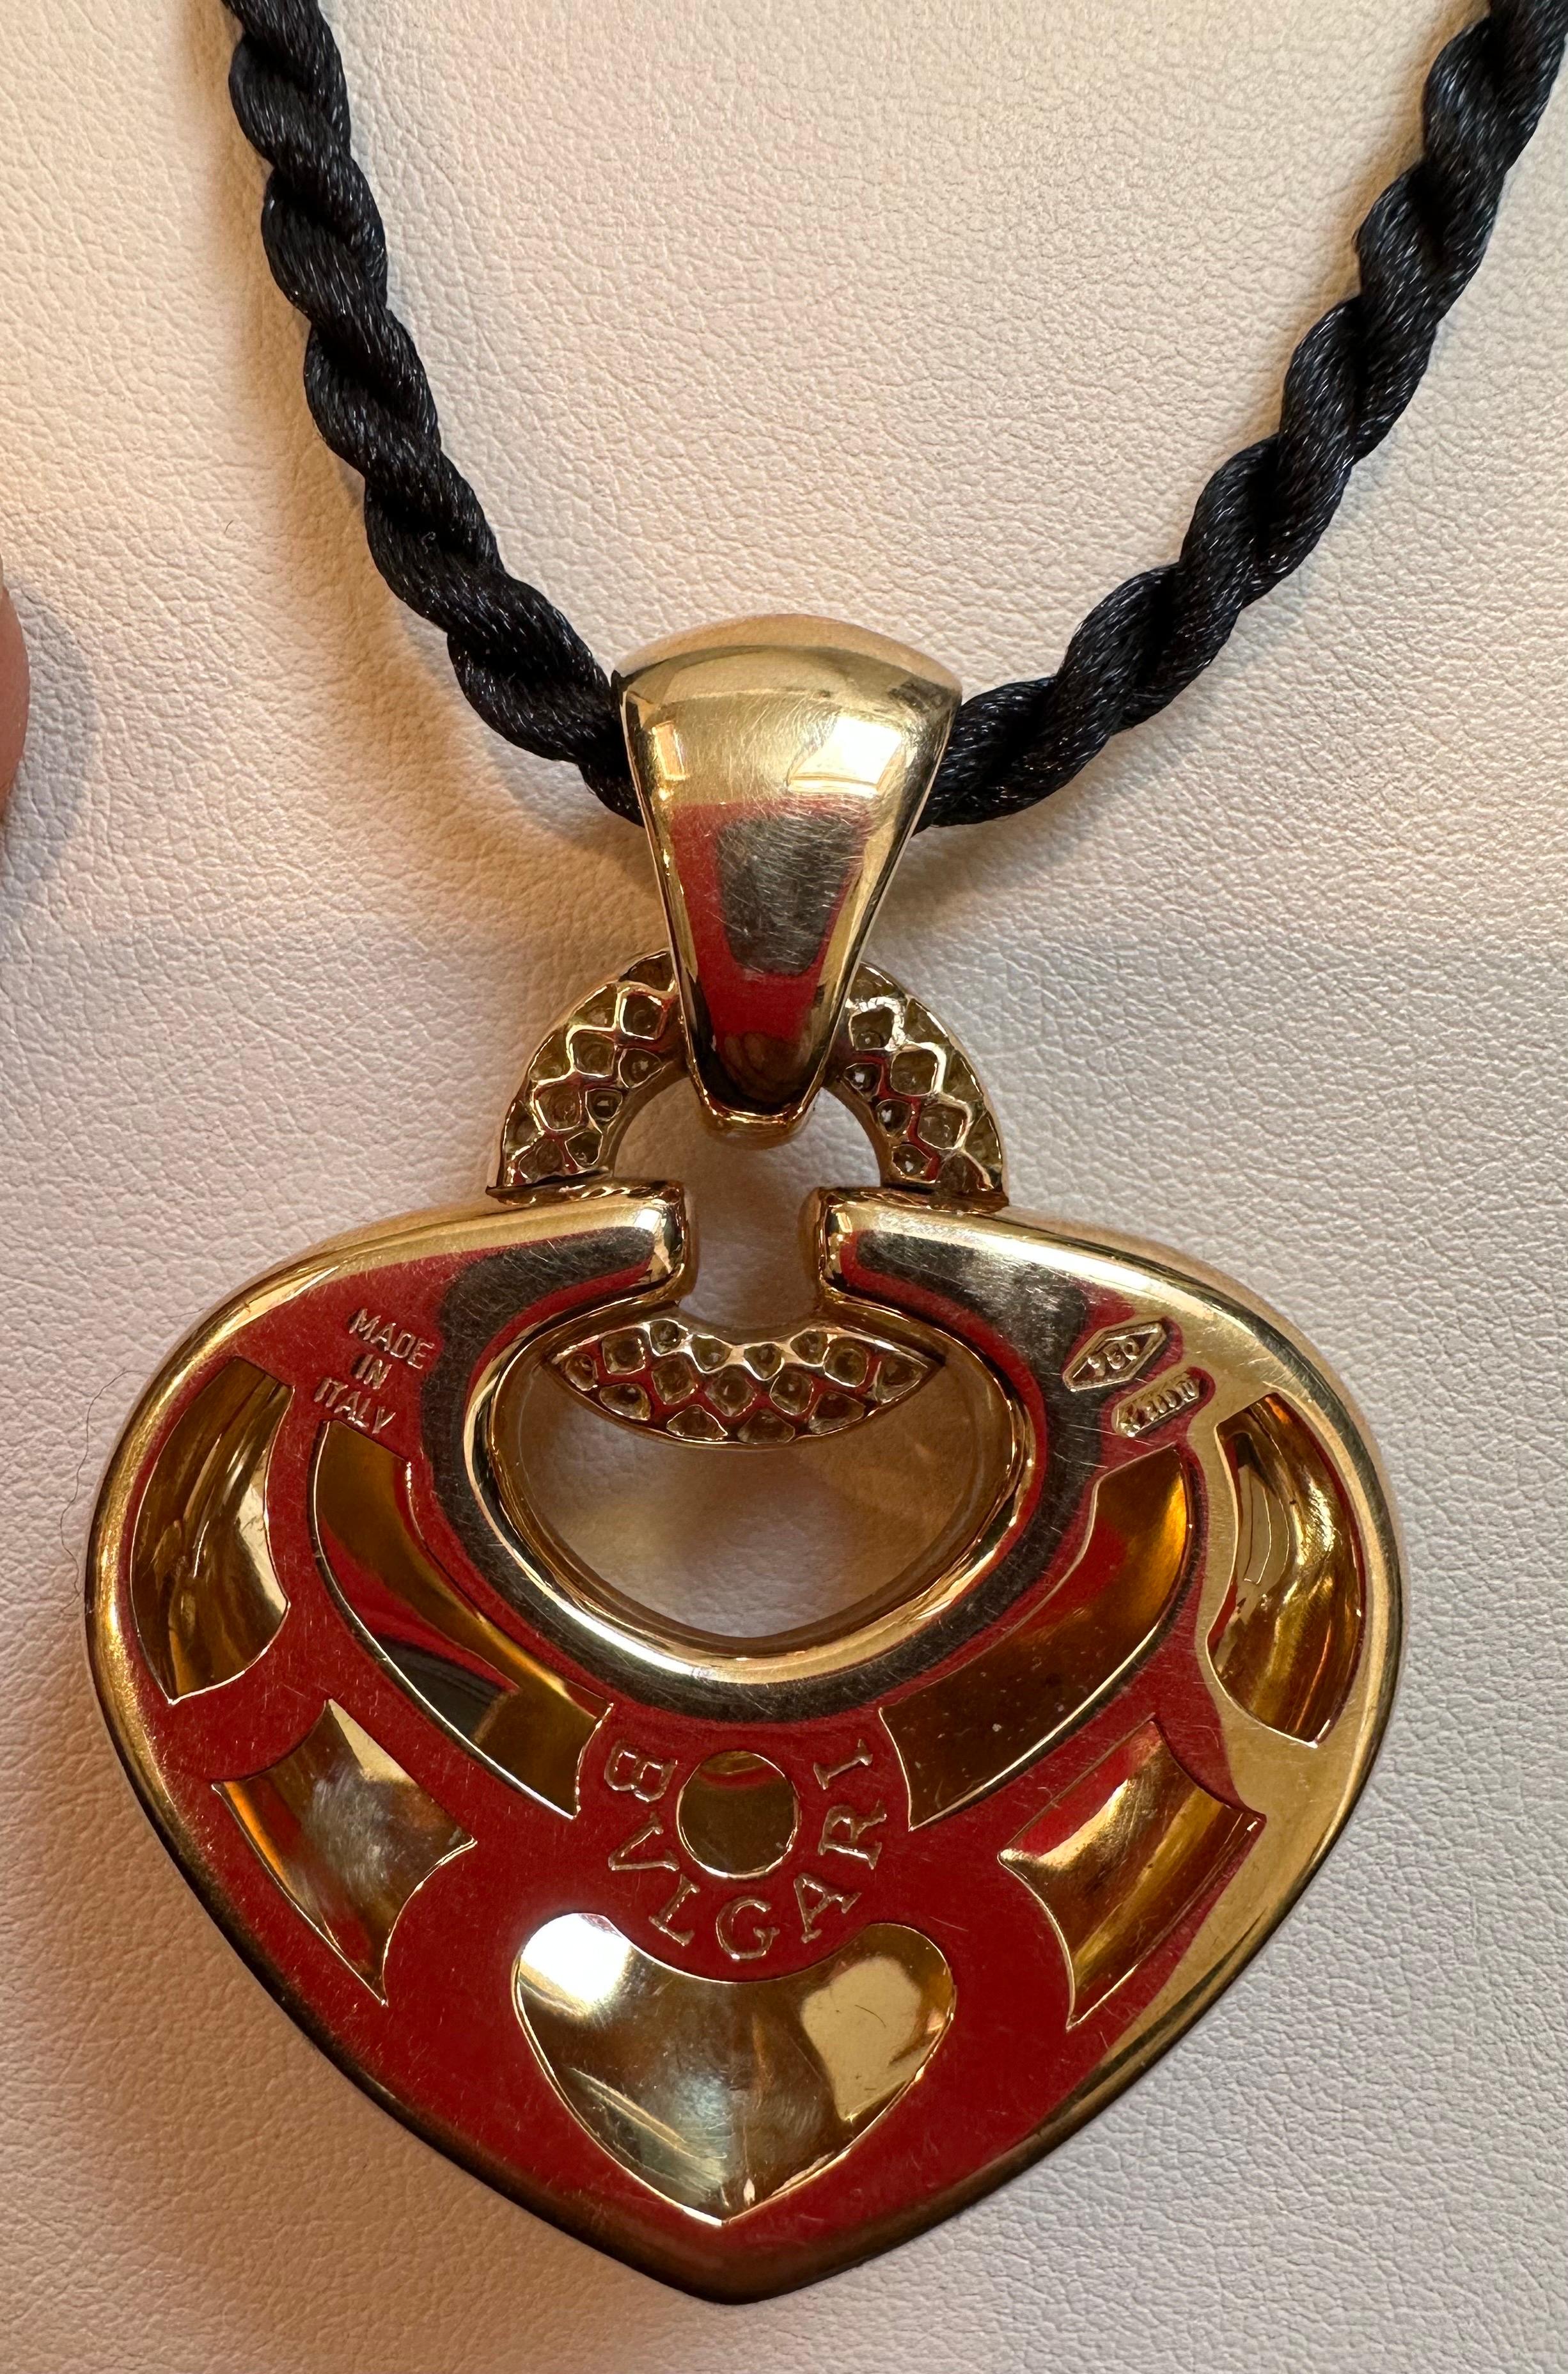 Bulgari 'Doppio Cuore' Gold and Diamond Puffed Heart Pendant on the Leather Cord 2